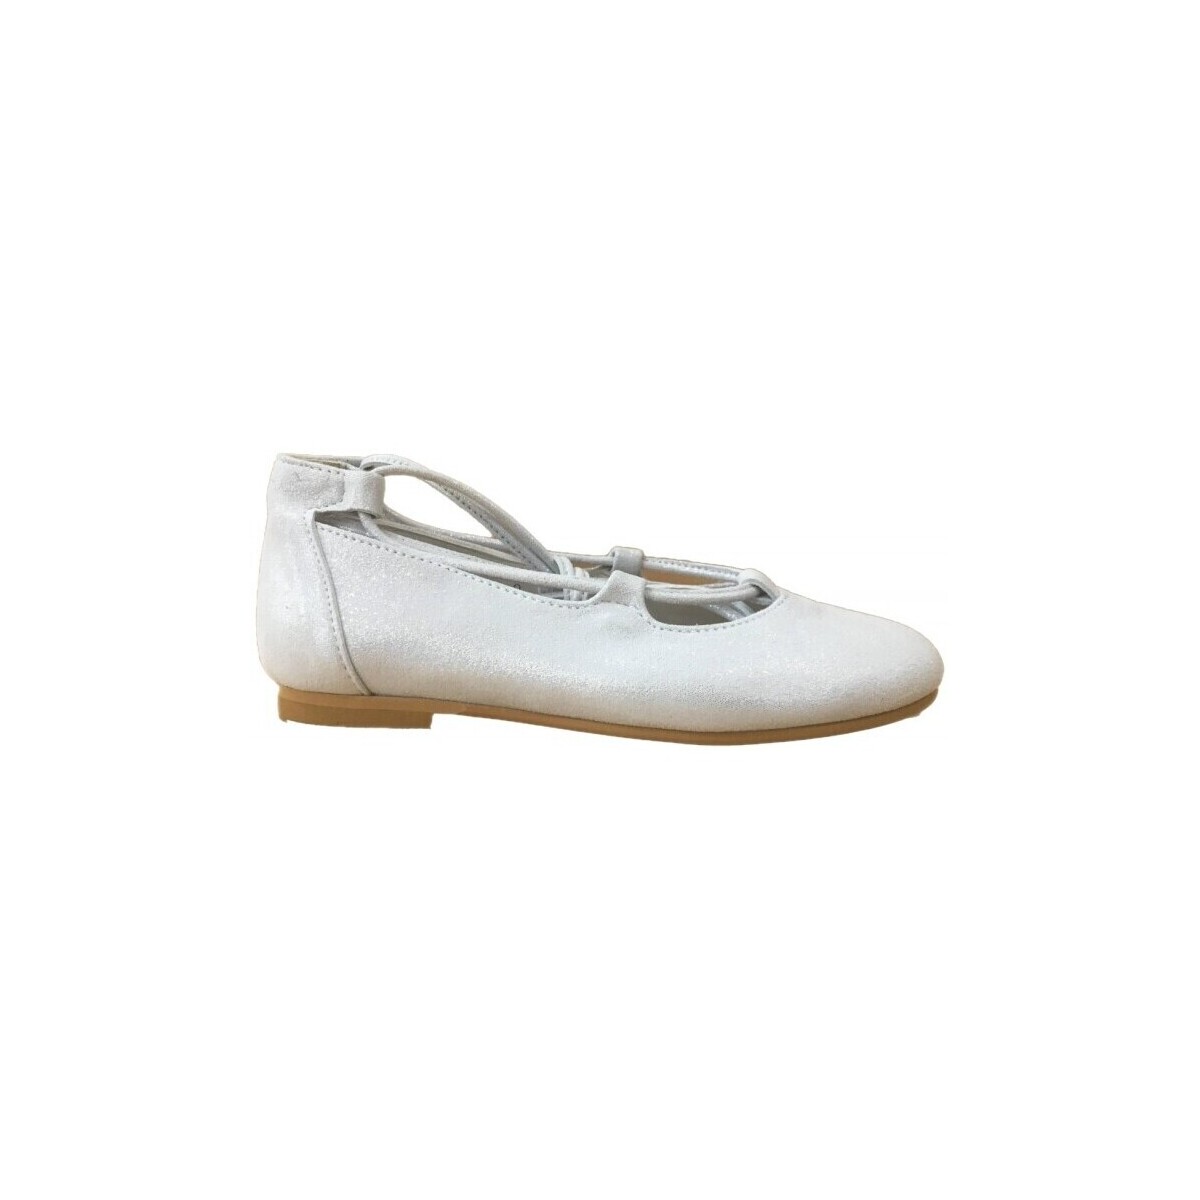 Schuhe Mädchen Ballerinas Colores 26227-18 Weiss